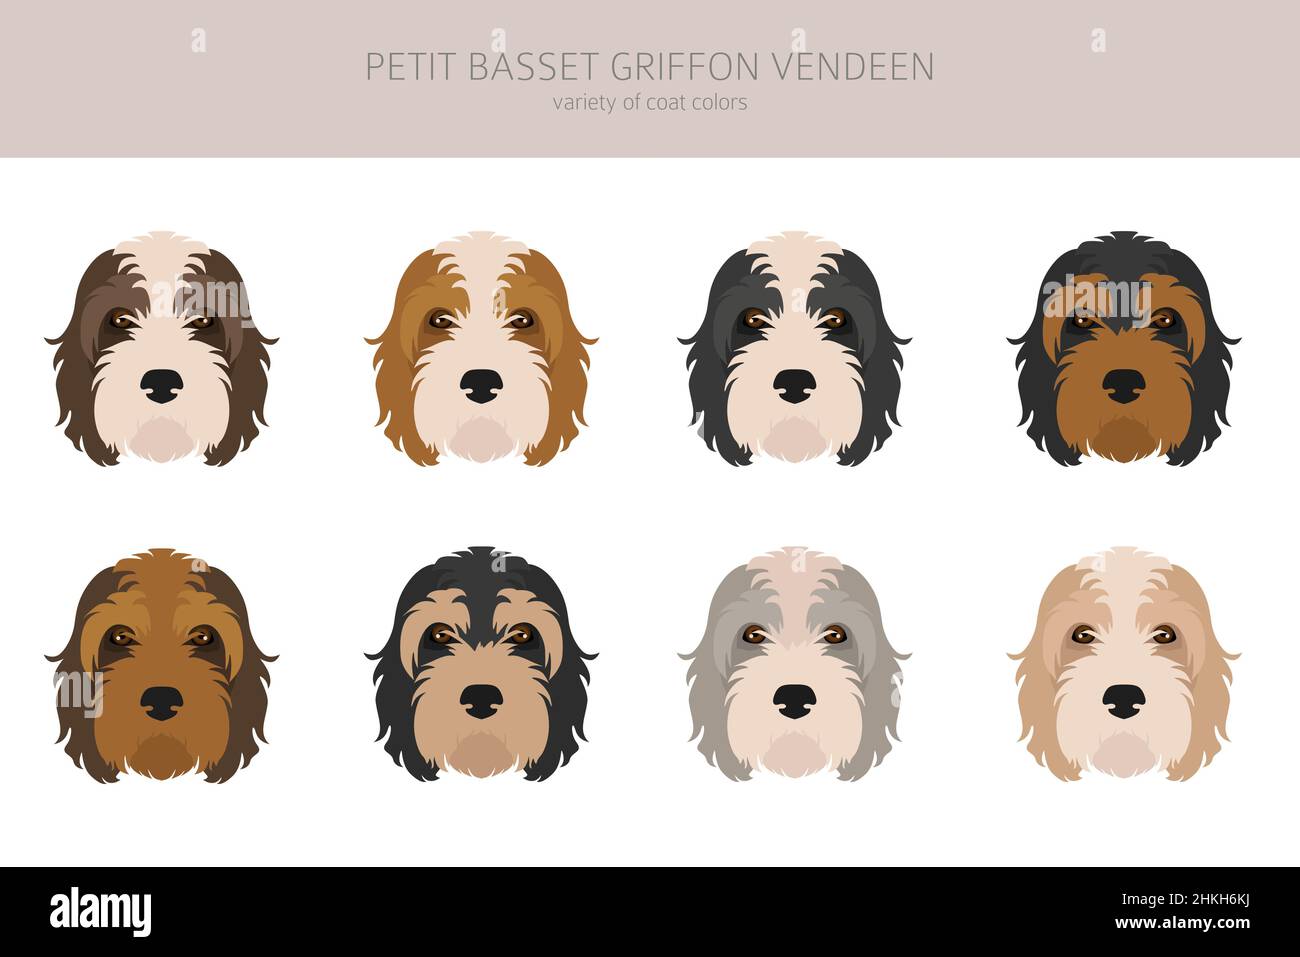 Petit Basset Griffon Vendeen clipart. Different poses, coat colors set.  Vector illustration Stock Vector